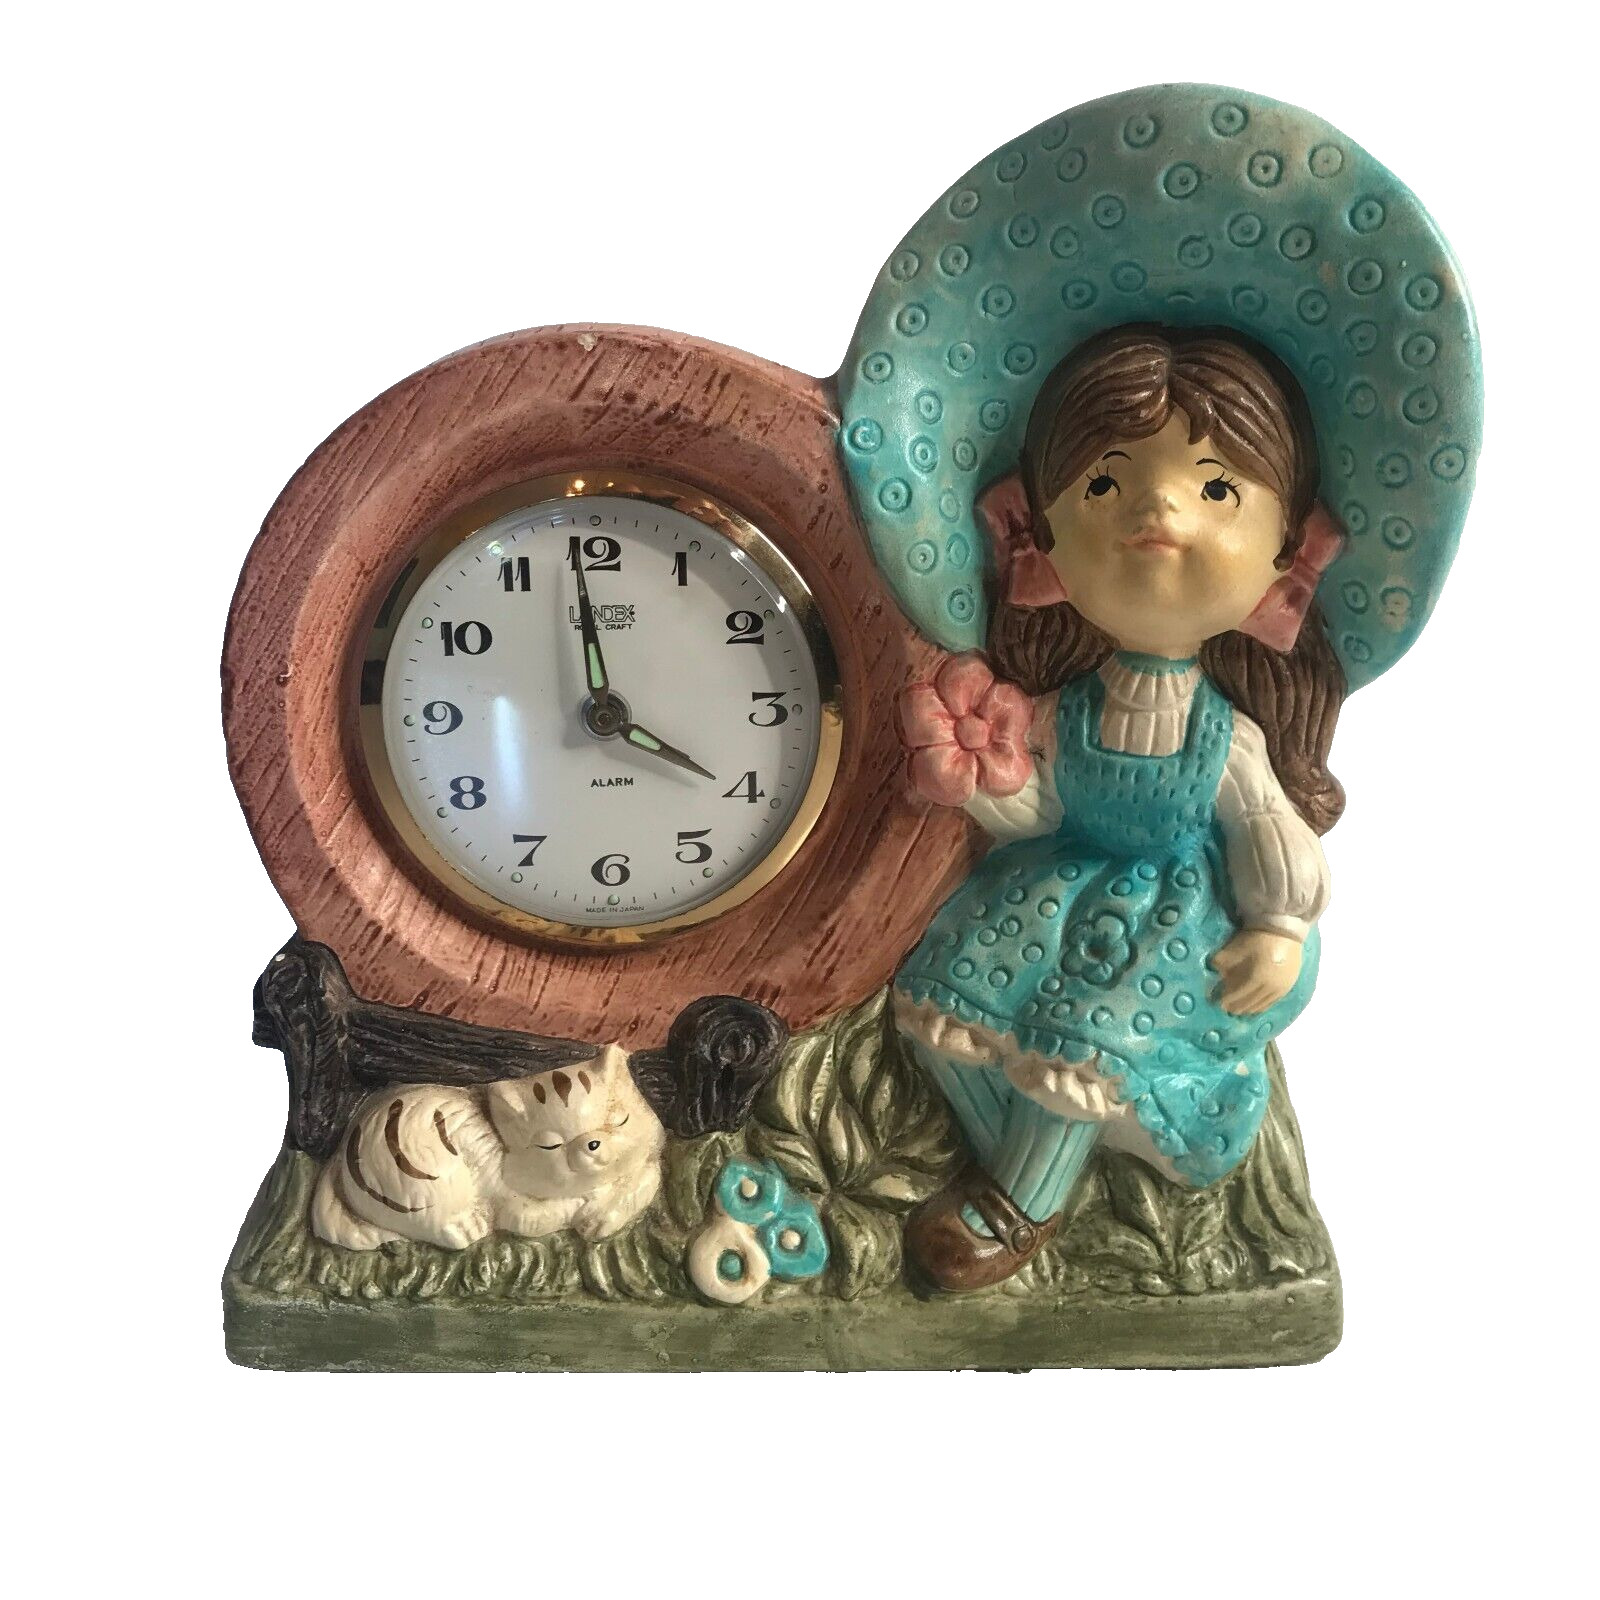 Vintage Ceramic Little Girl Clock by (Landex Royal Craft) Made in Japan